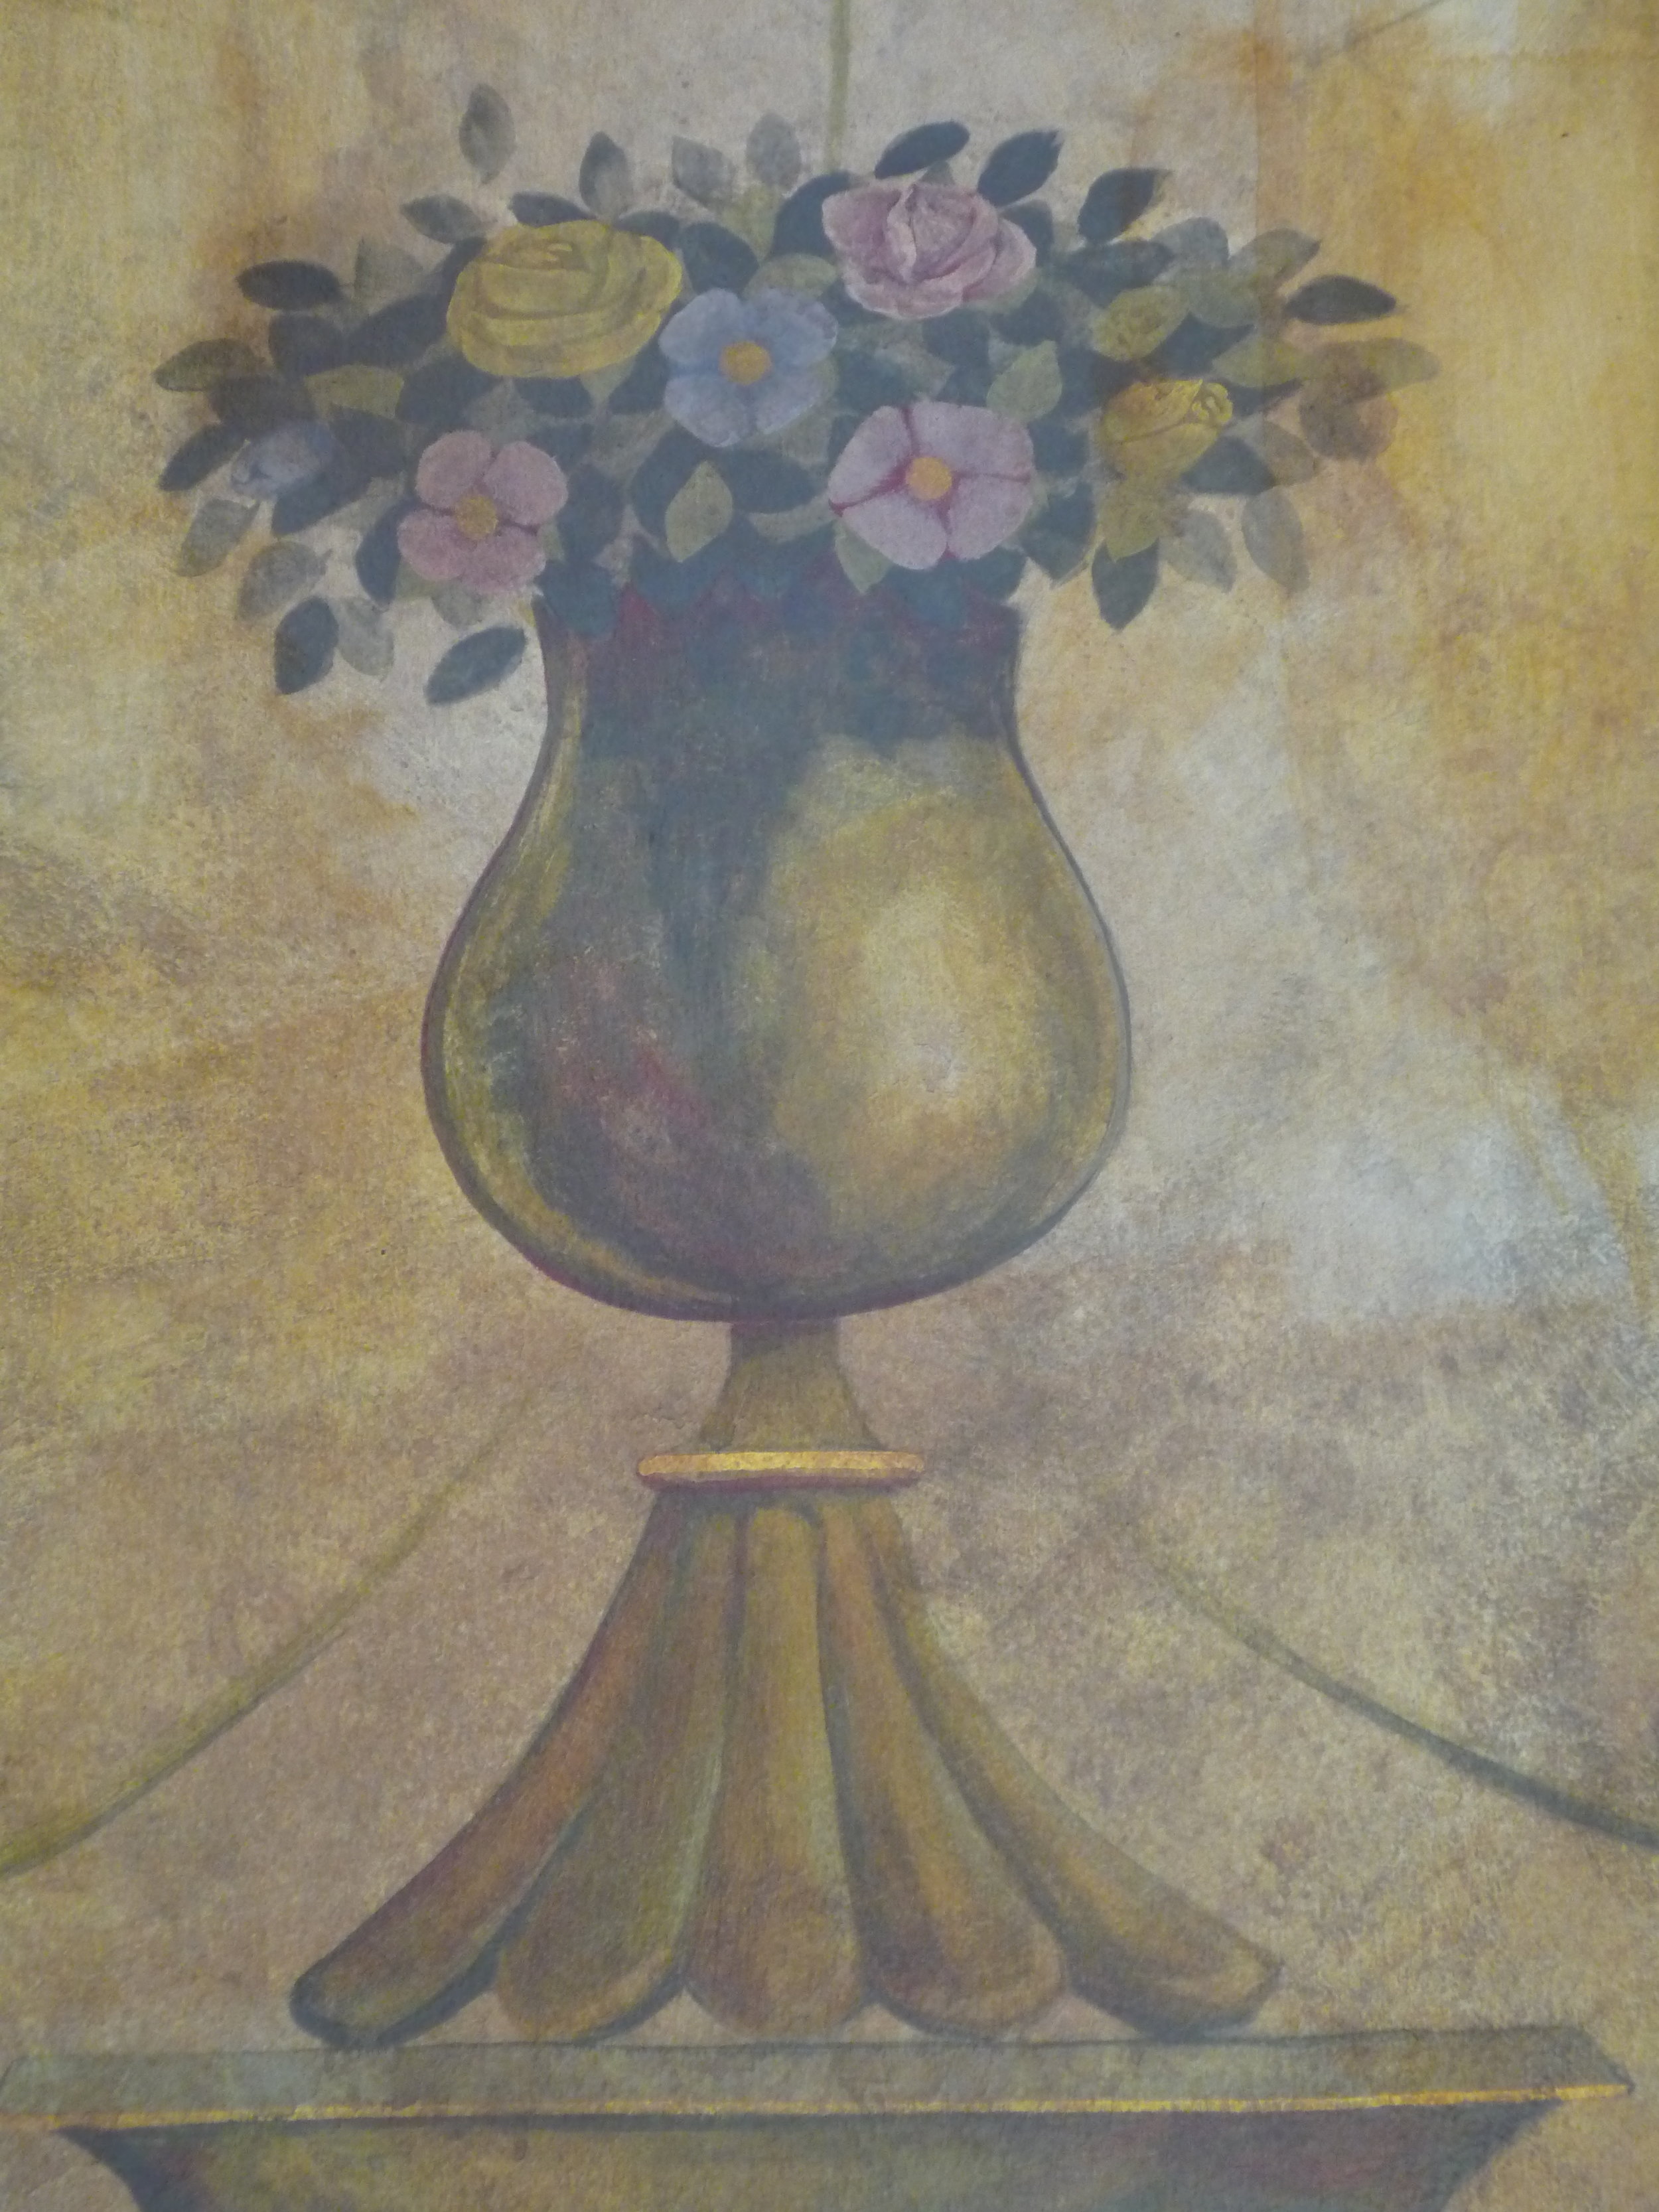 ORIG-mantle-vase-detail_4306542289_o.jpg